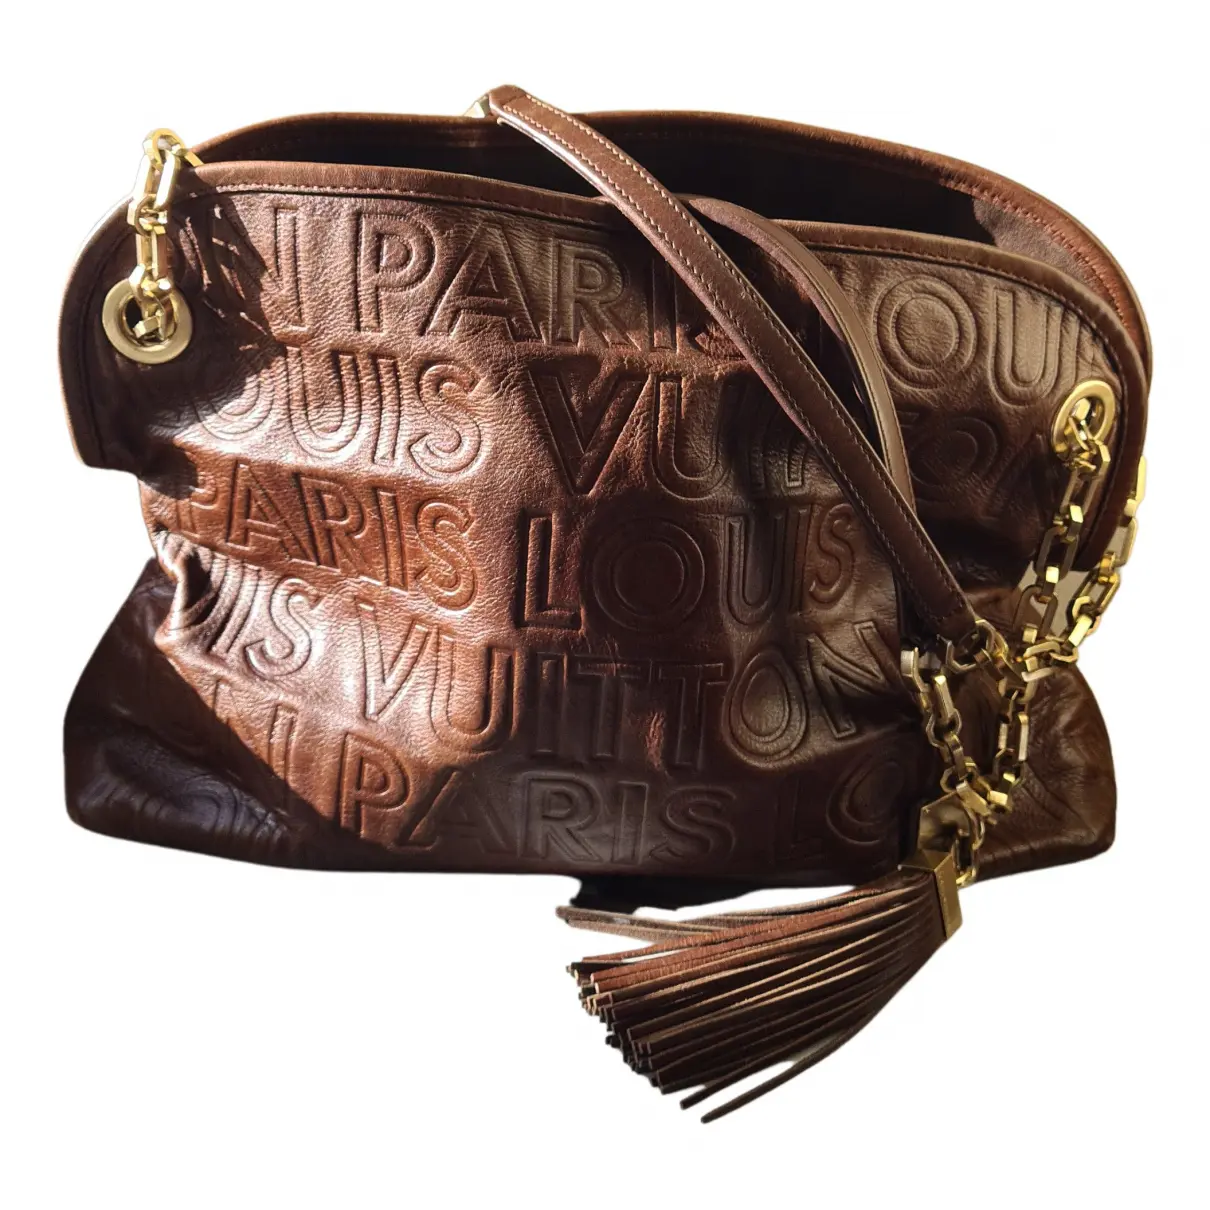 Whisper leather handbag Louis Vuitton